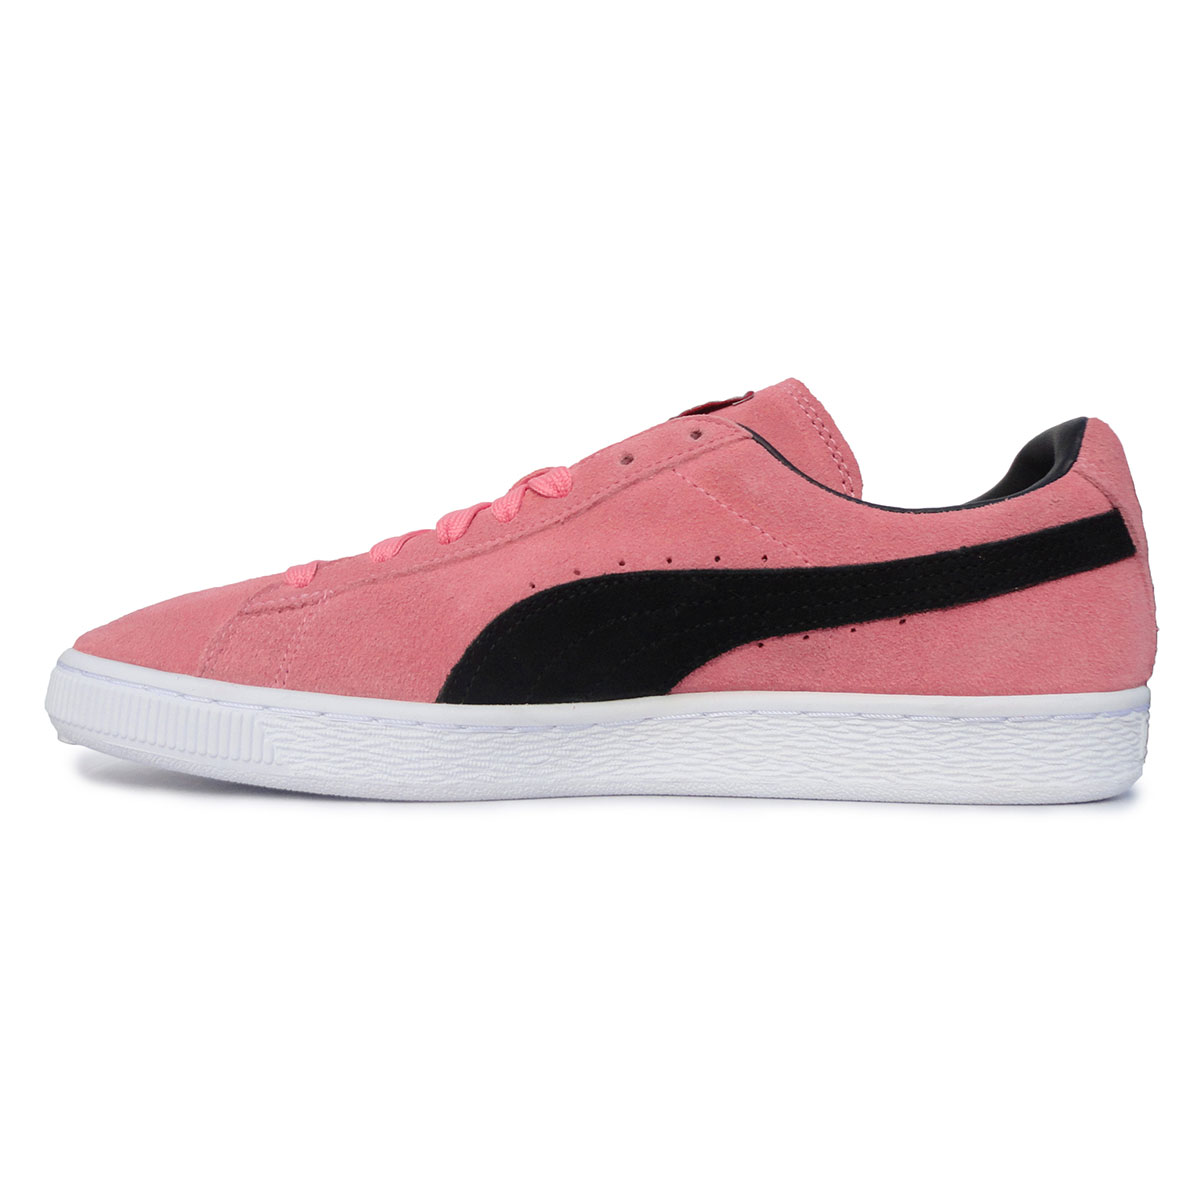 Puma Suede Classic Plus pink  363242-46